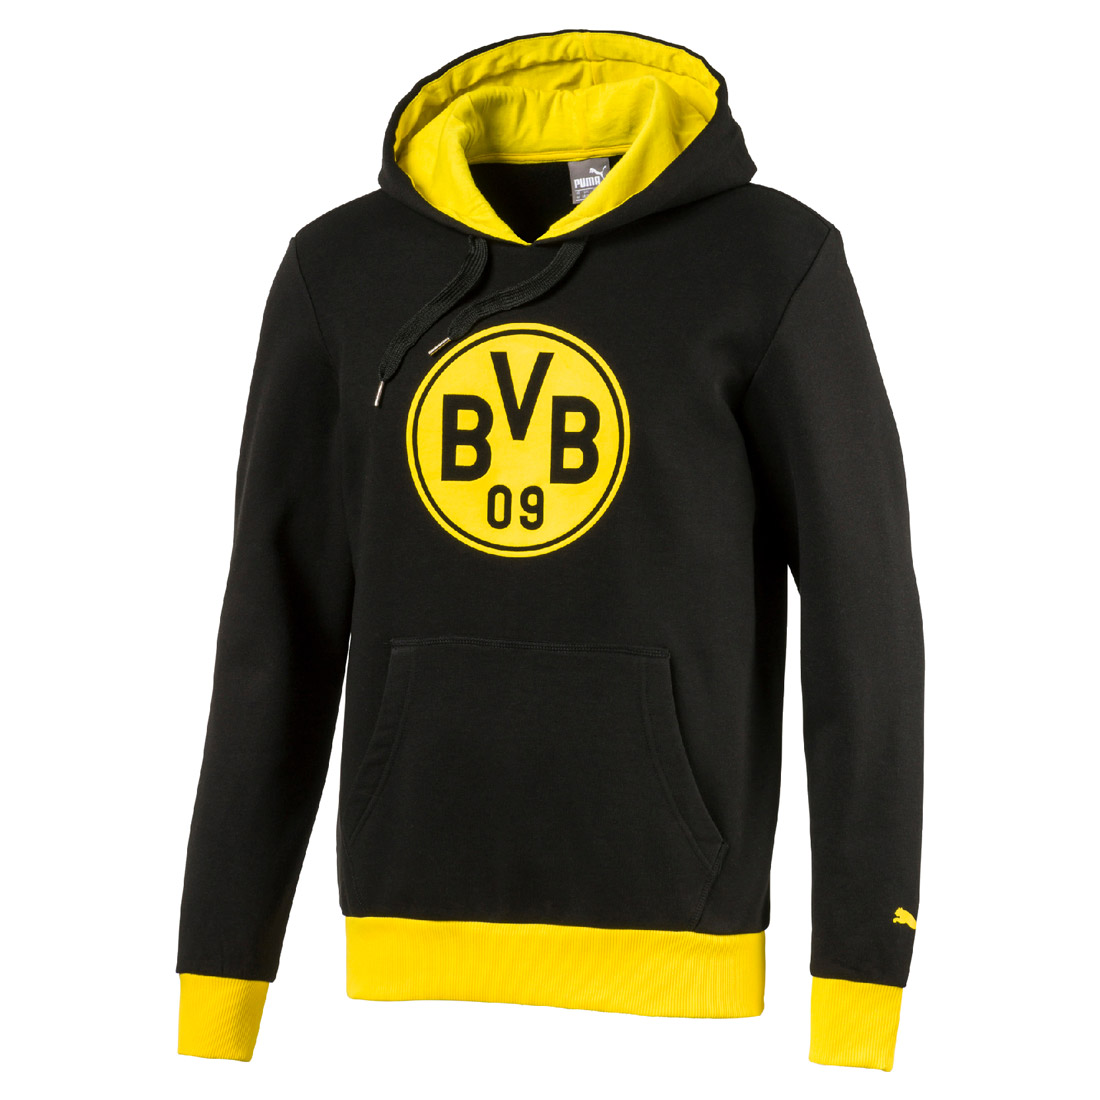 Puma BVB Badge Hoody Junior KIDS Sweatshirt Dortmund 09 schwarz 750126